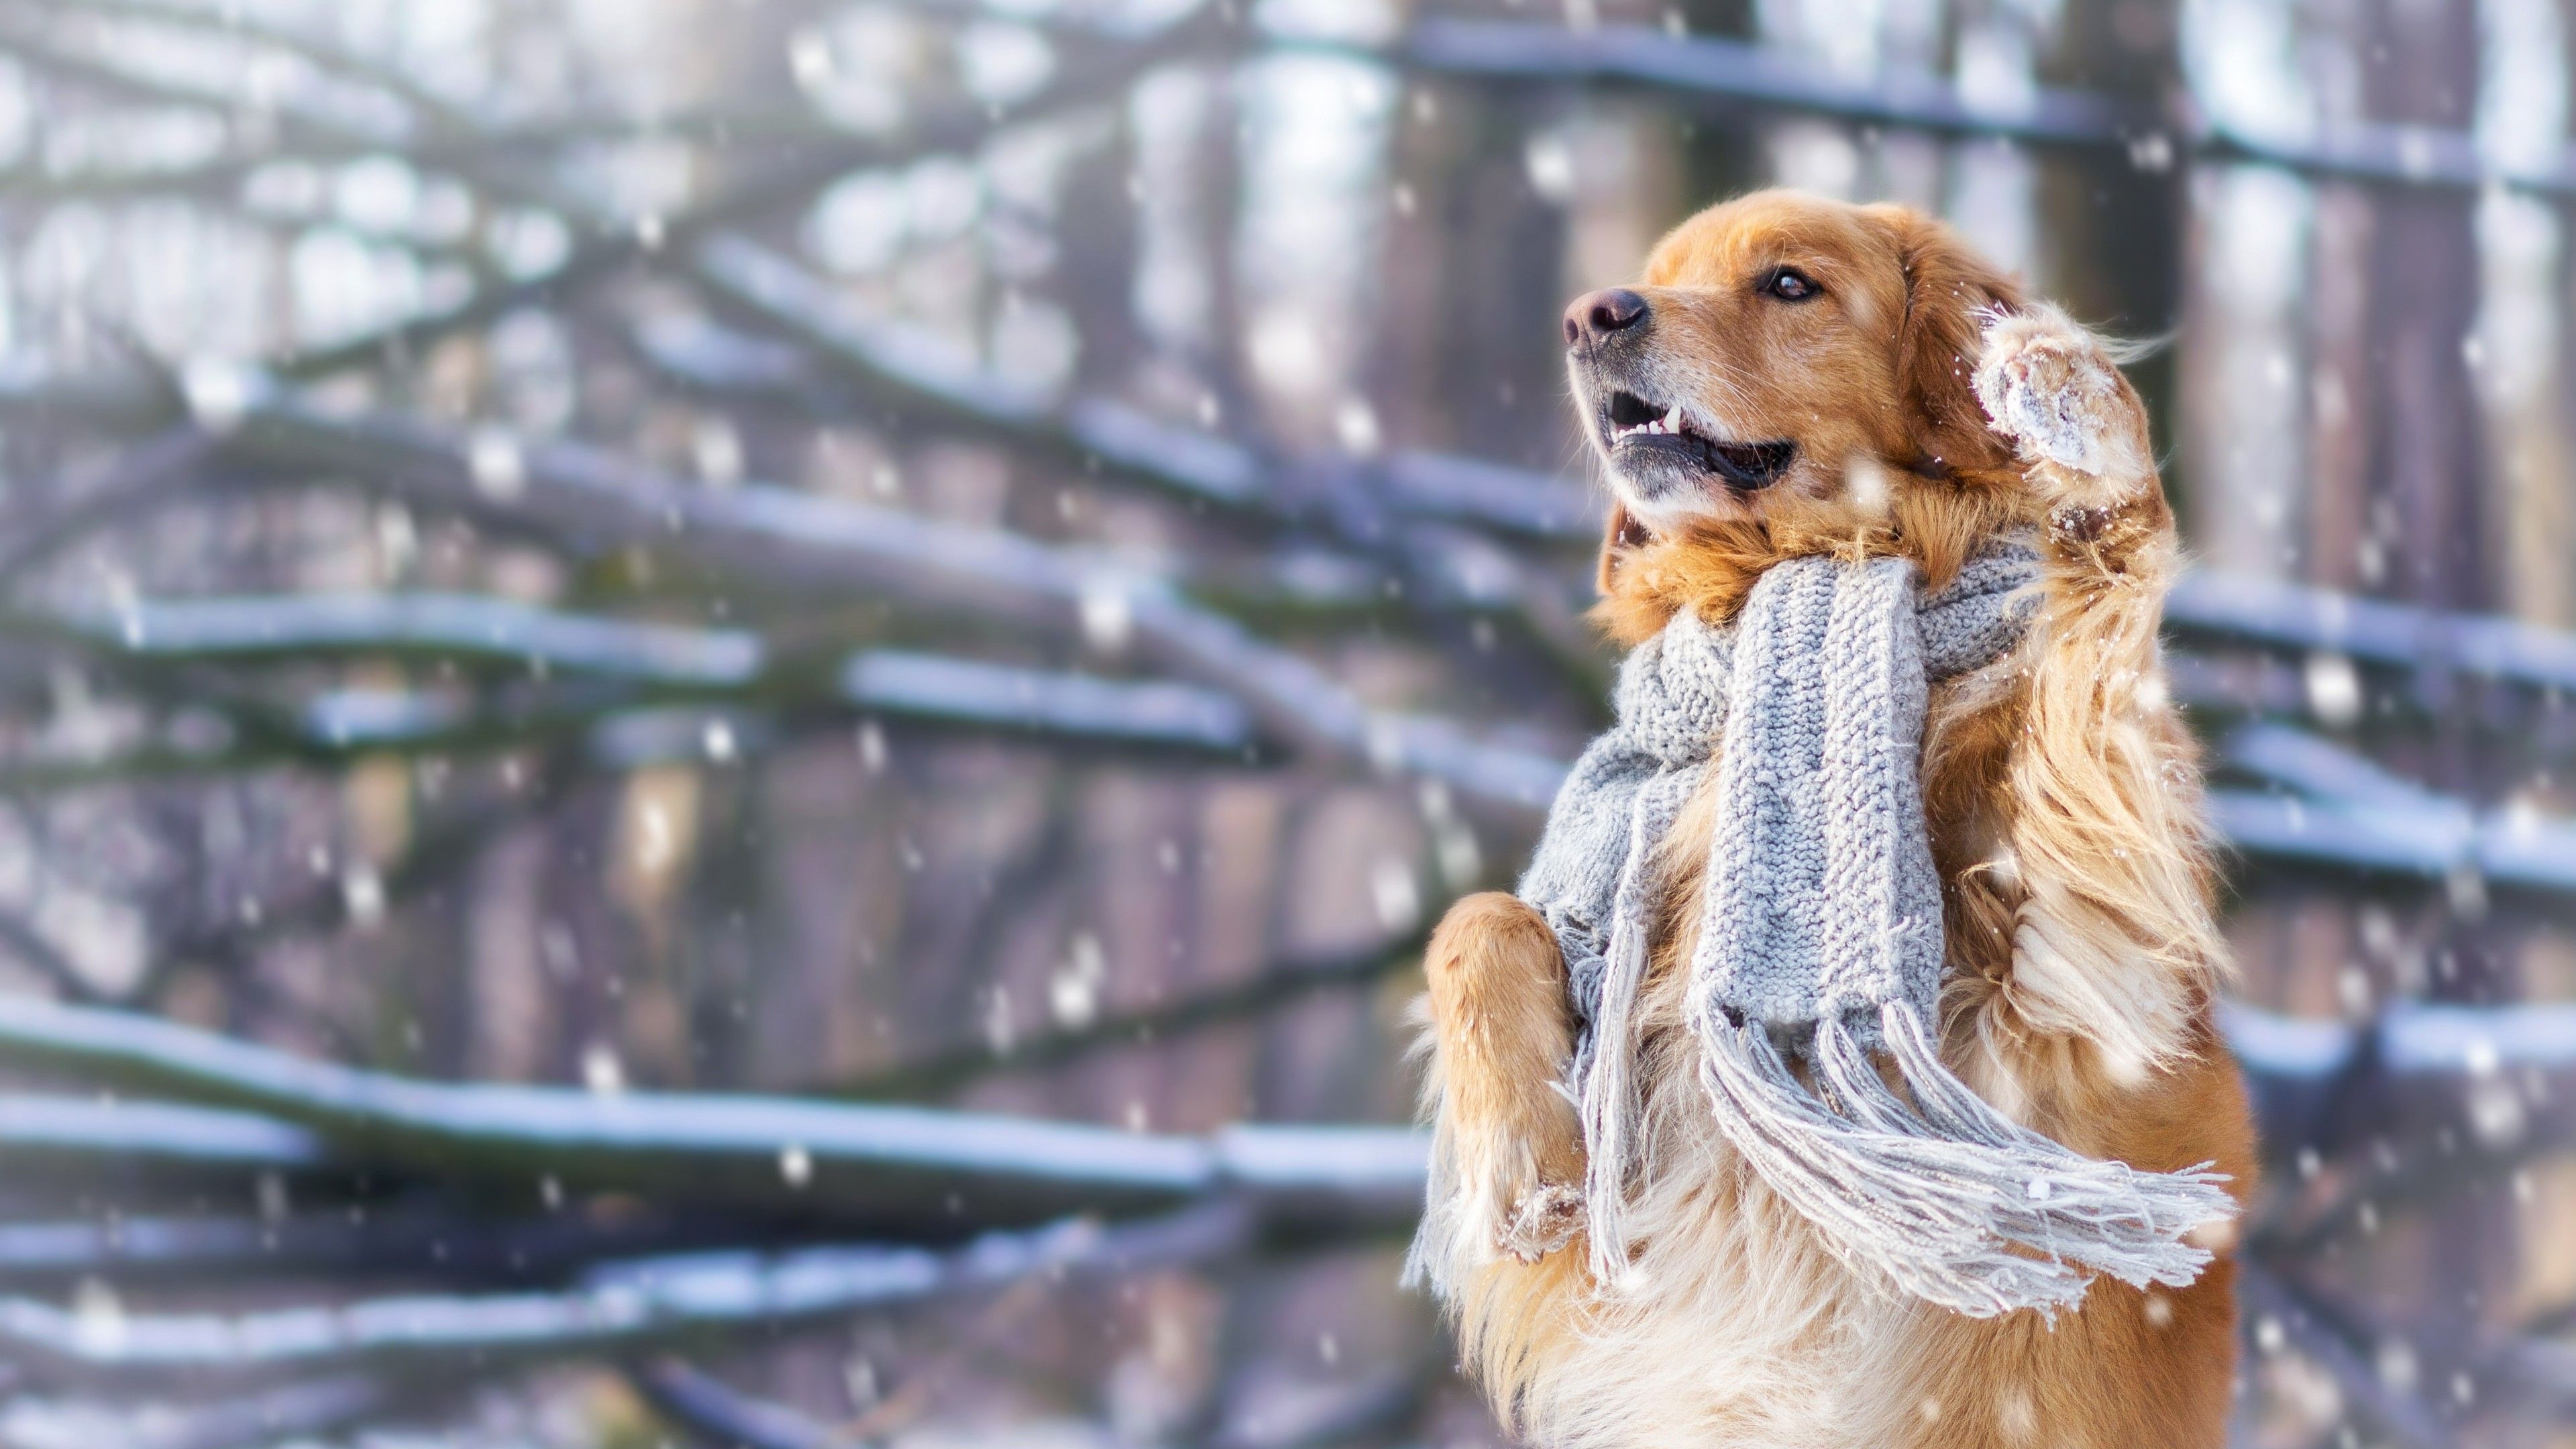 Snow dog wallpapers, Snowy backgrounds, Winter scenes, Chilled beauty, 3840x2160 4K Desktop